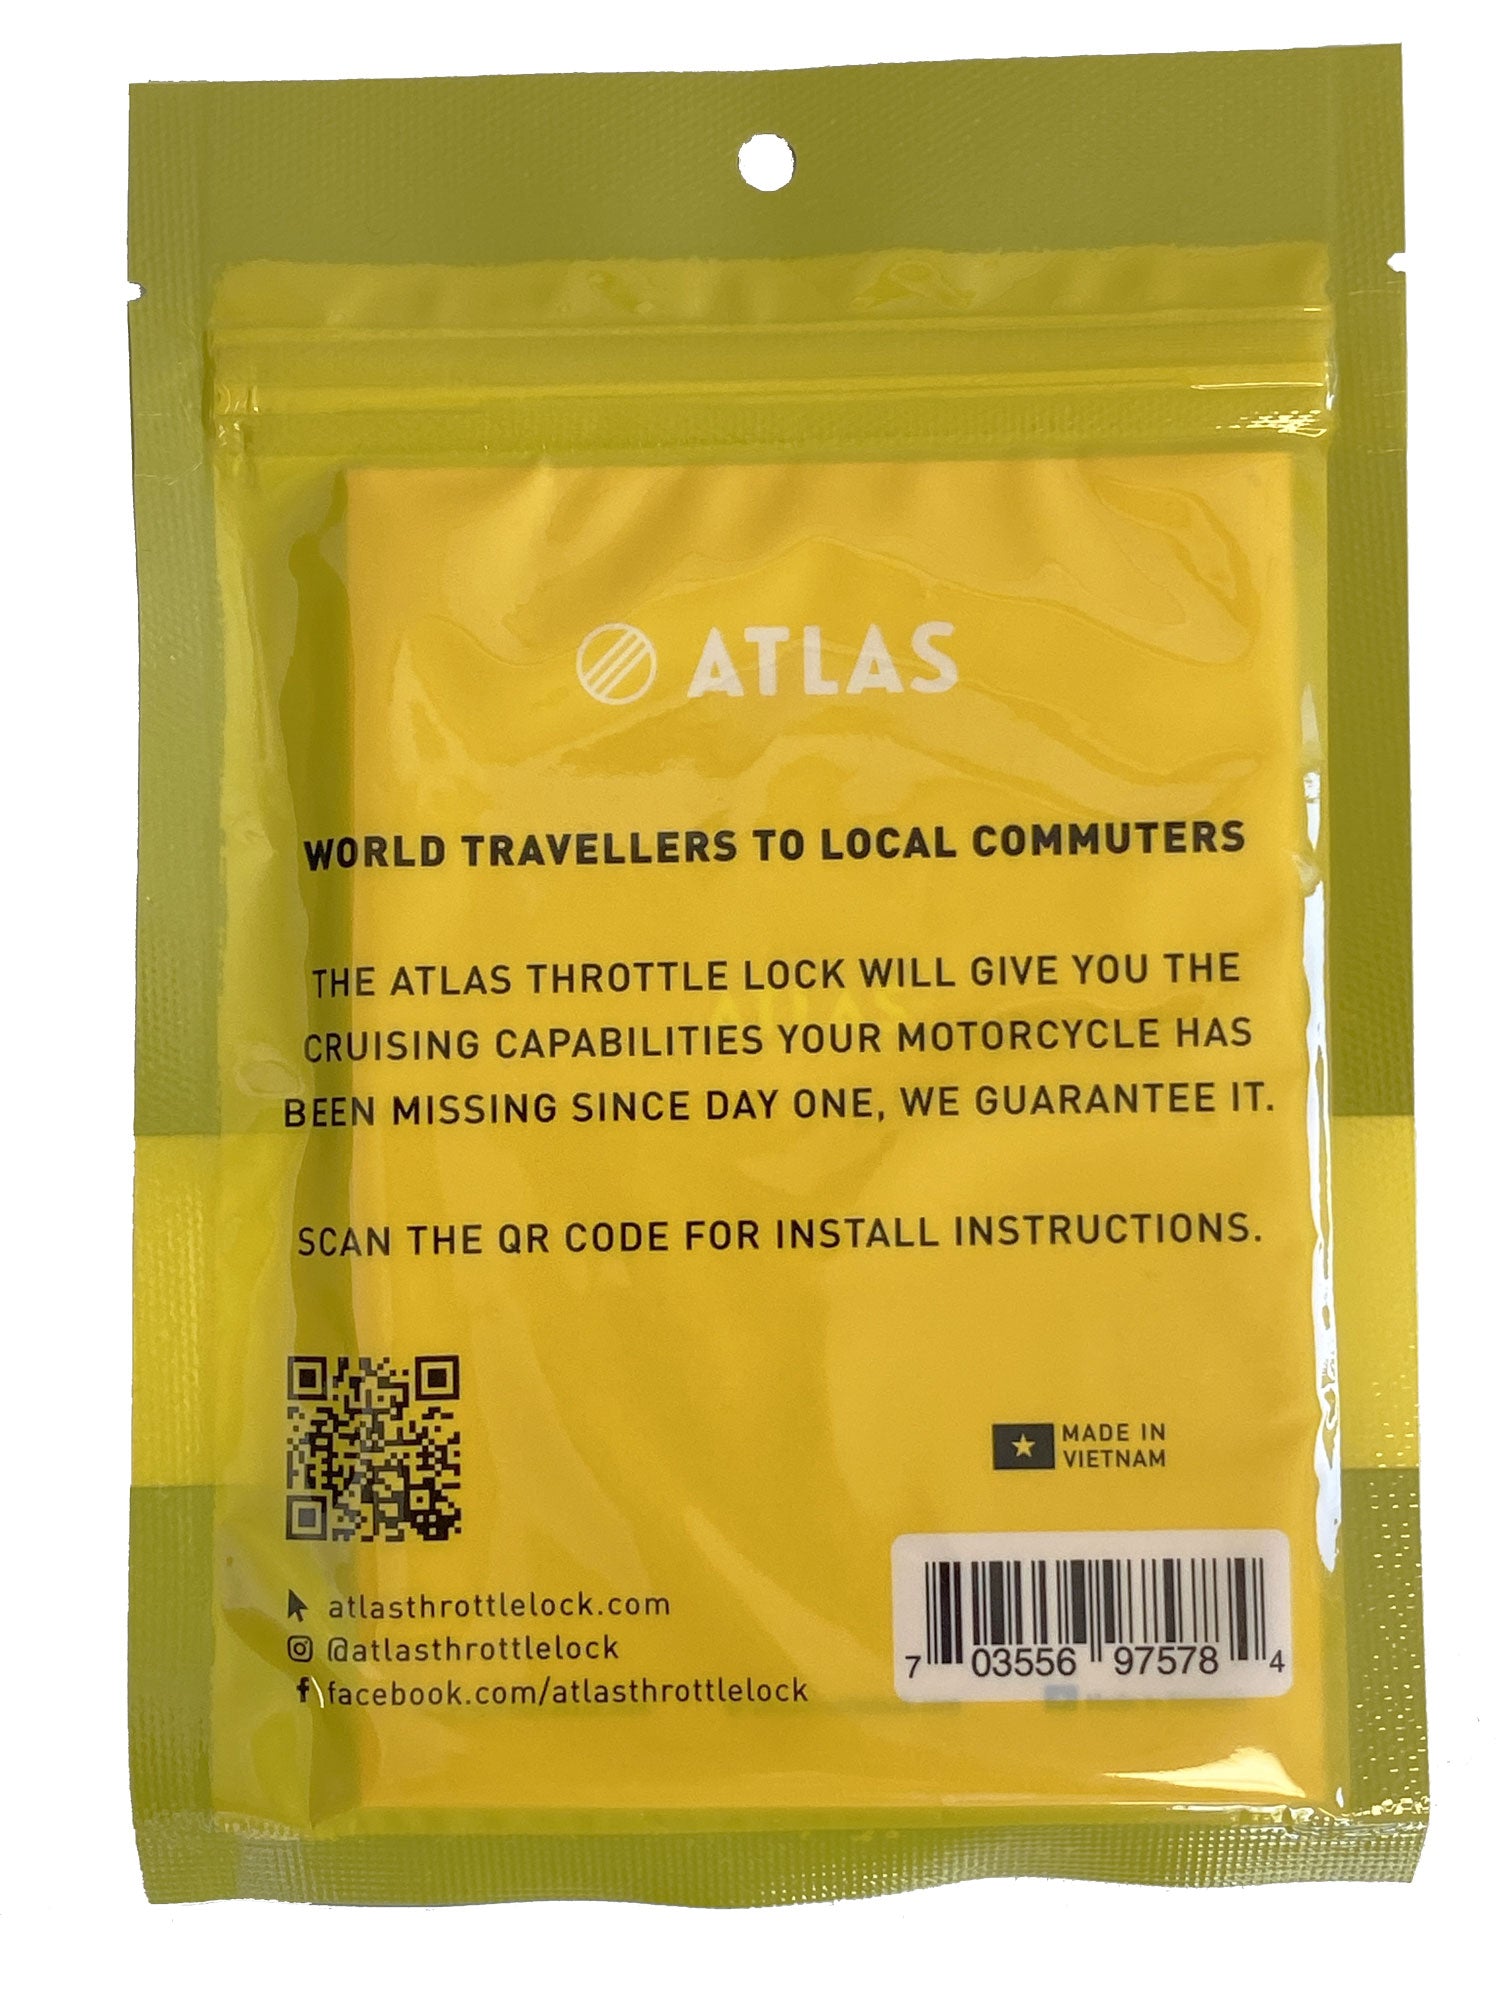 ATLAS Hardware Pack